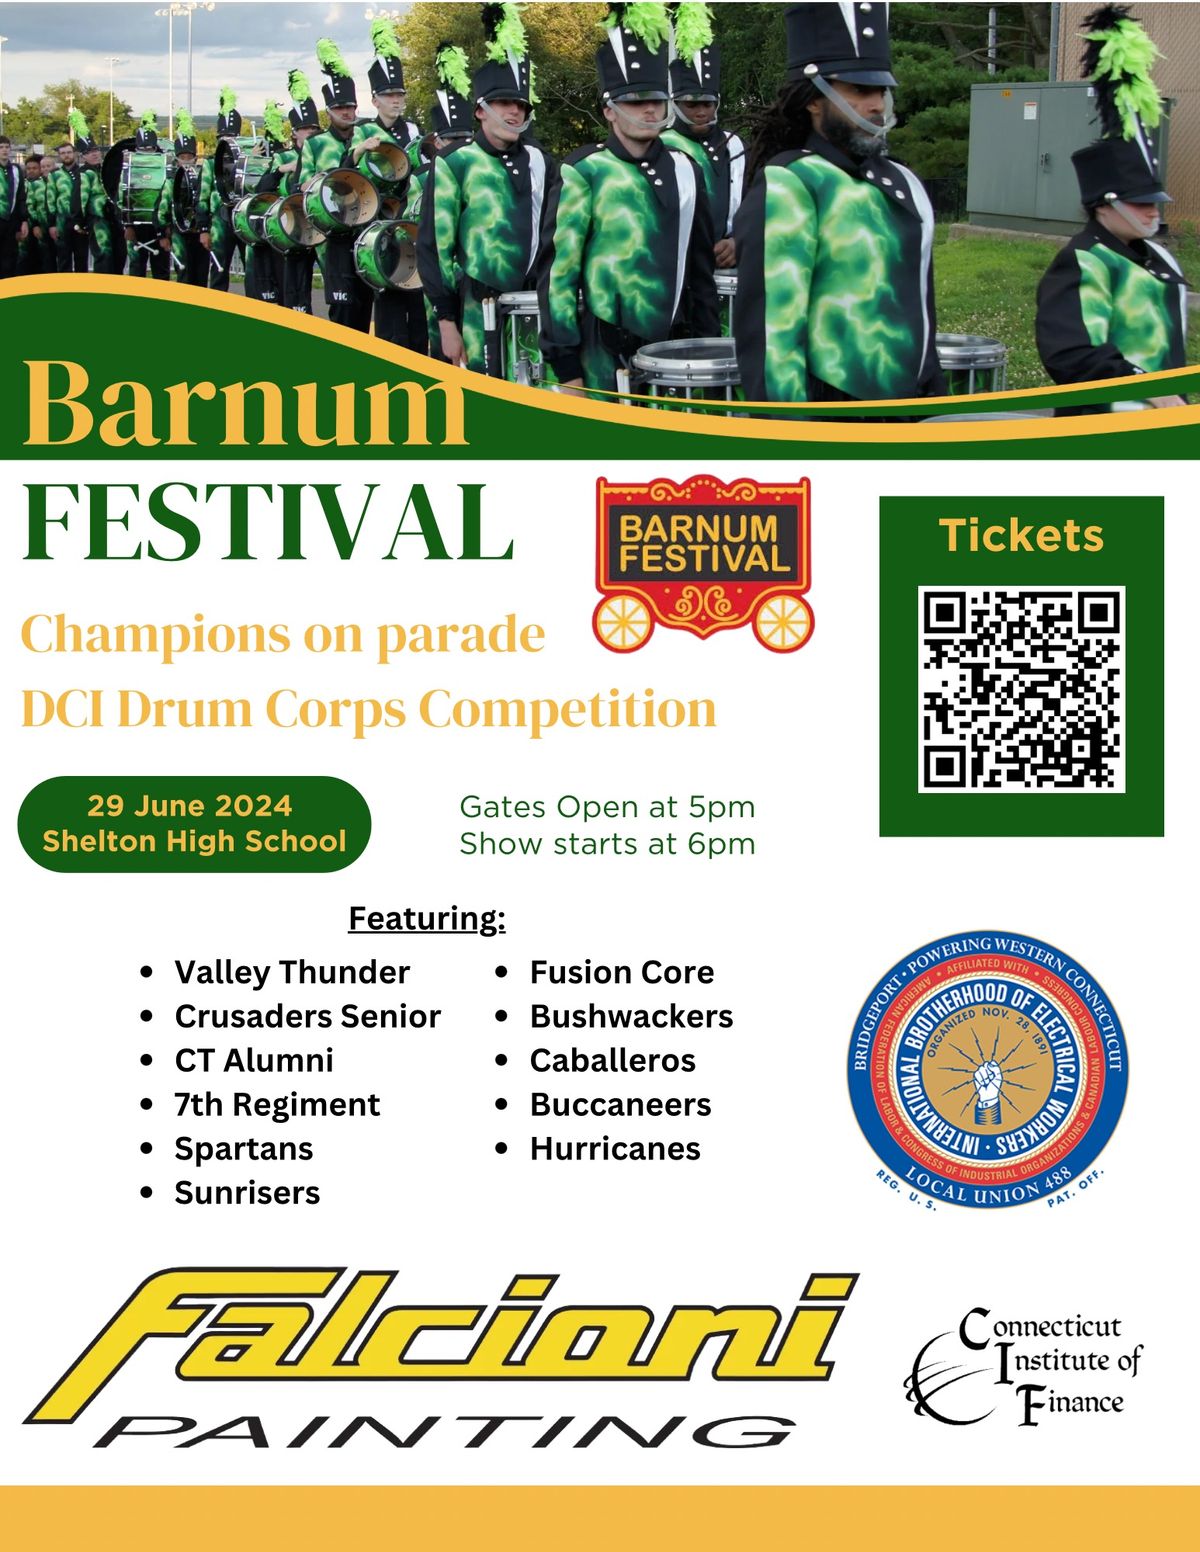 Barnum Festival Champions On Parade 